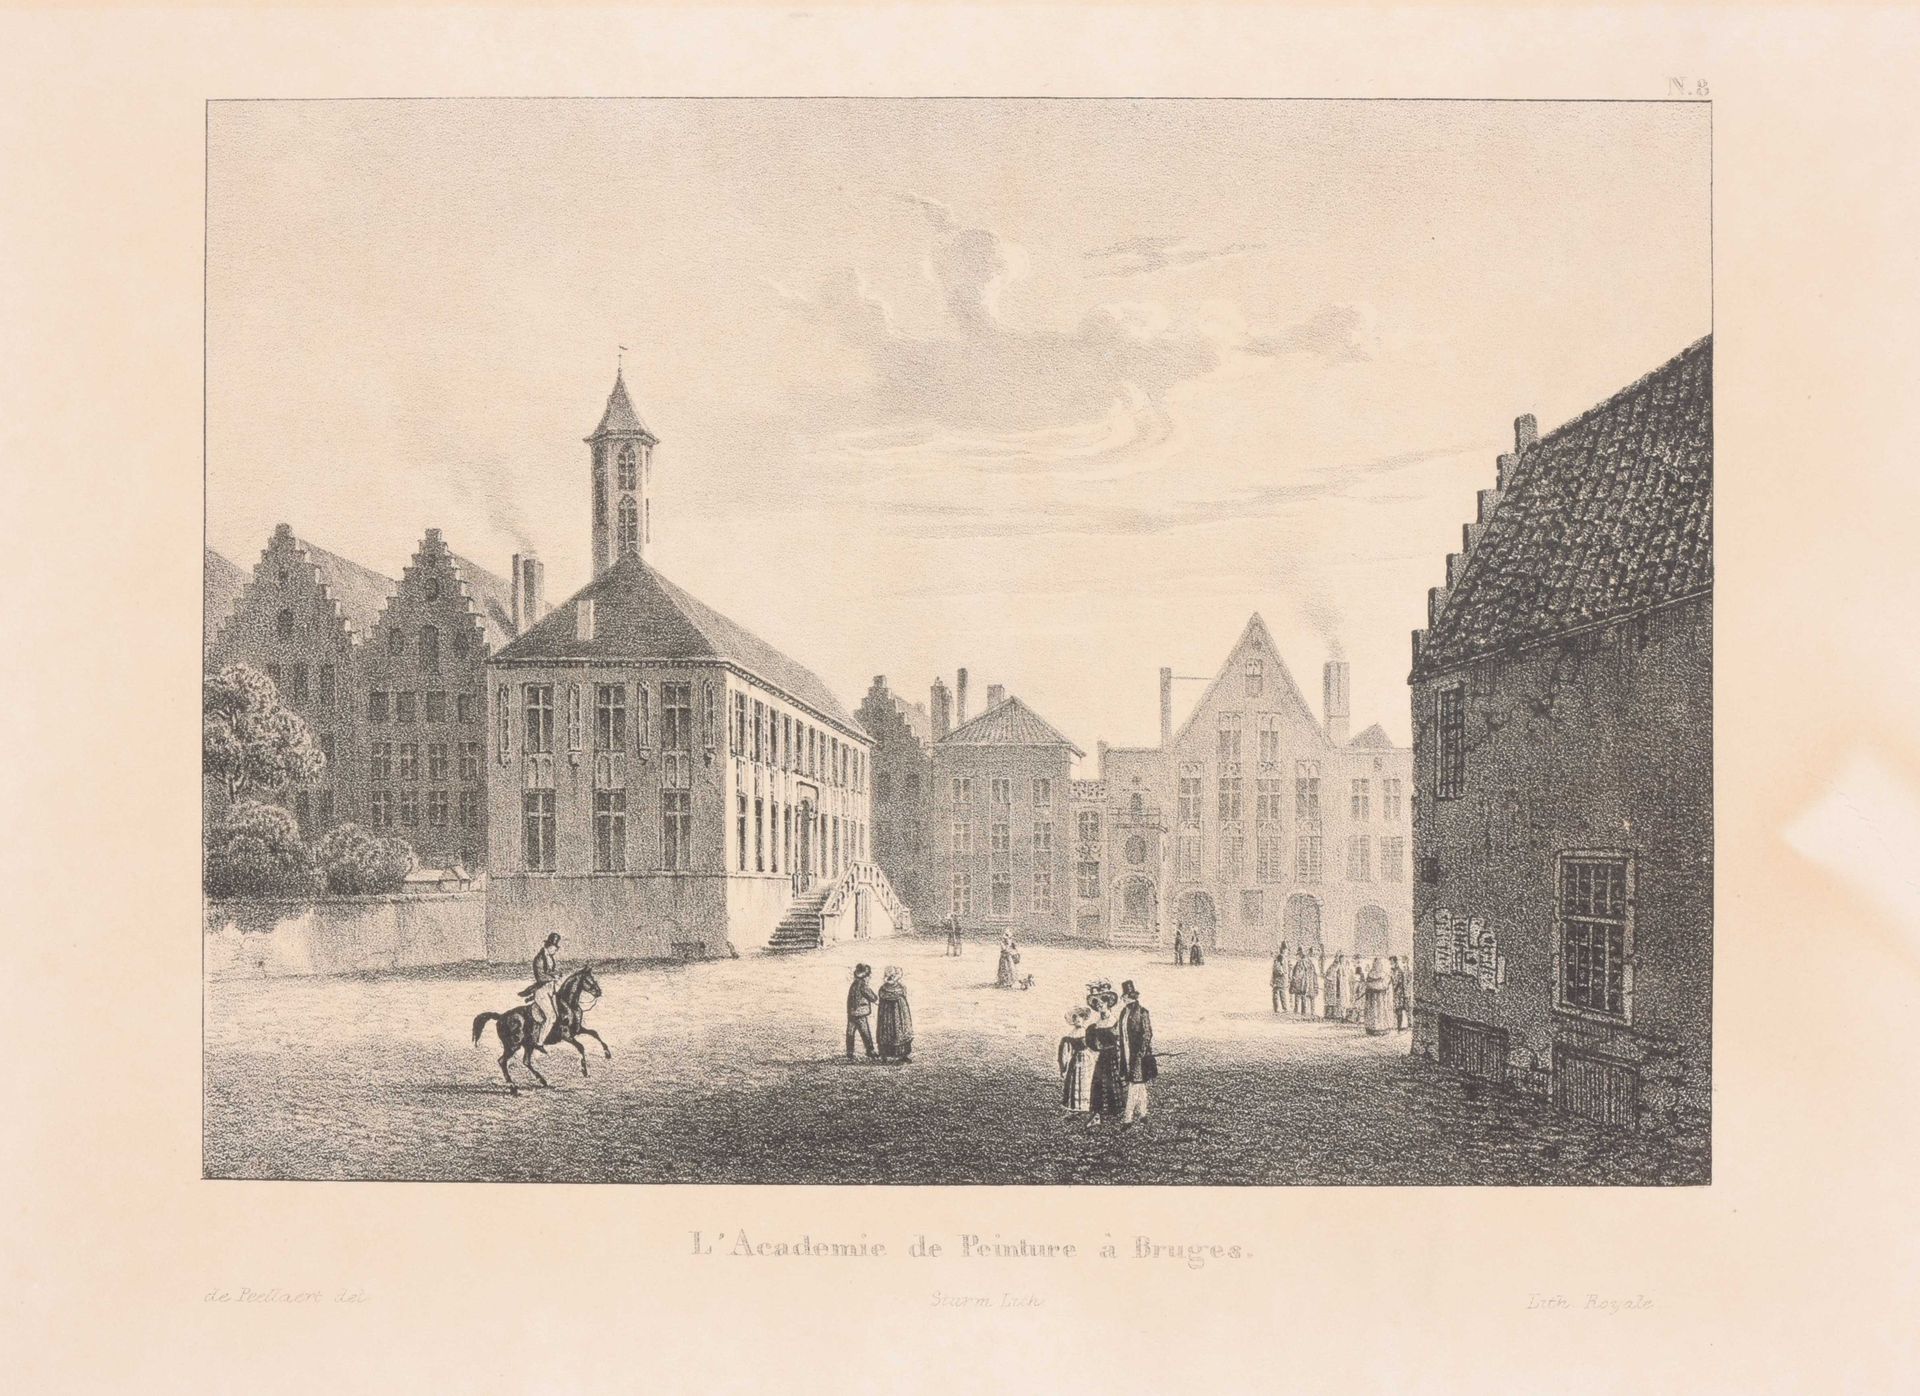 [Brugge] L'Academie de Peinture à Bruges

Litho (16 x 19.5 cm) van Sturm naar de&hellip;